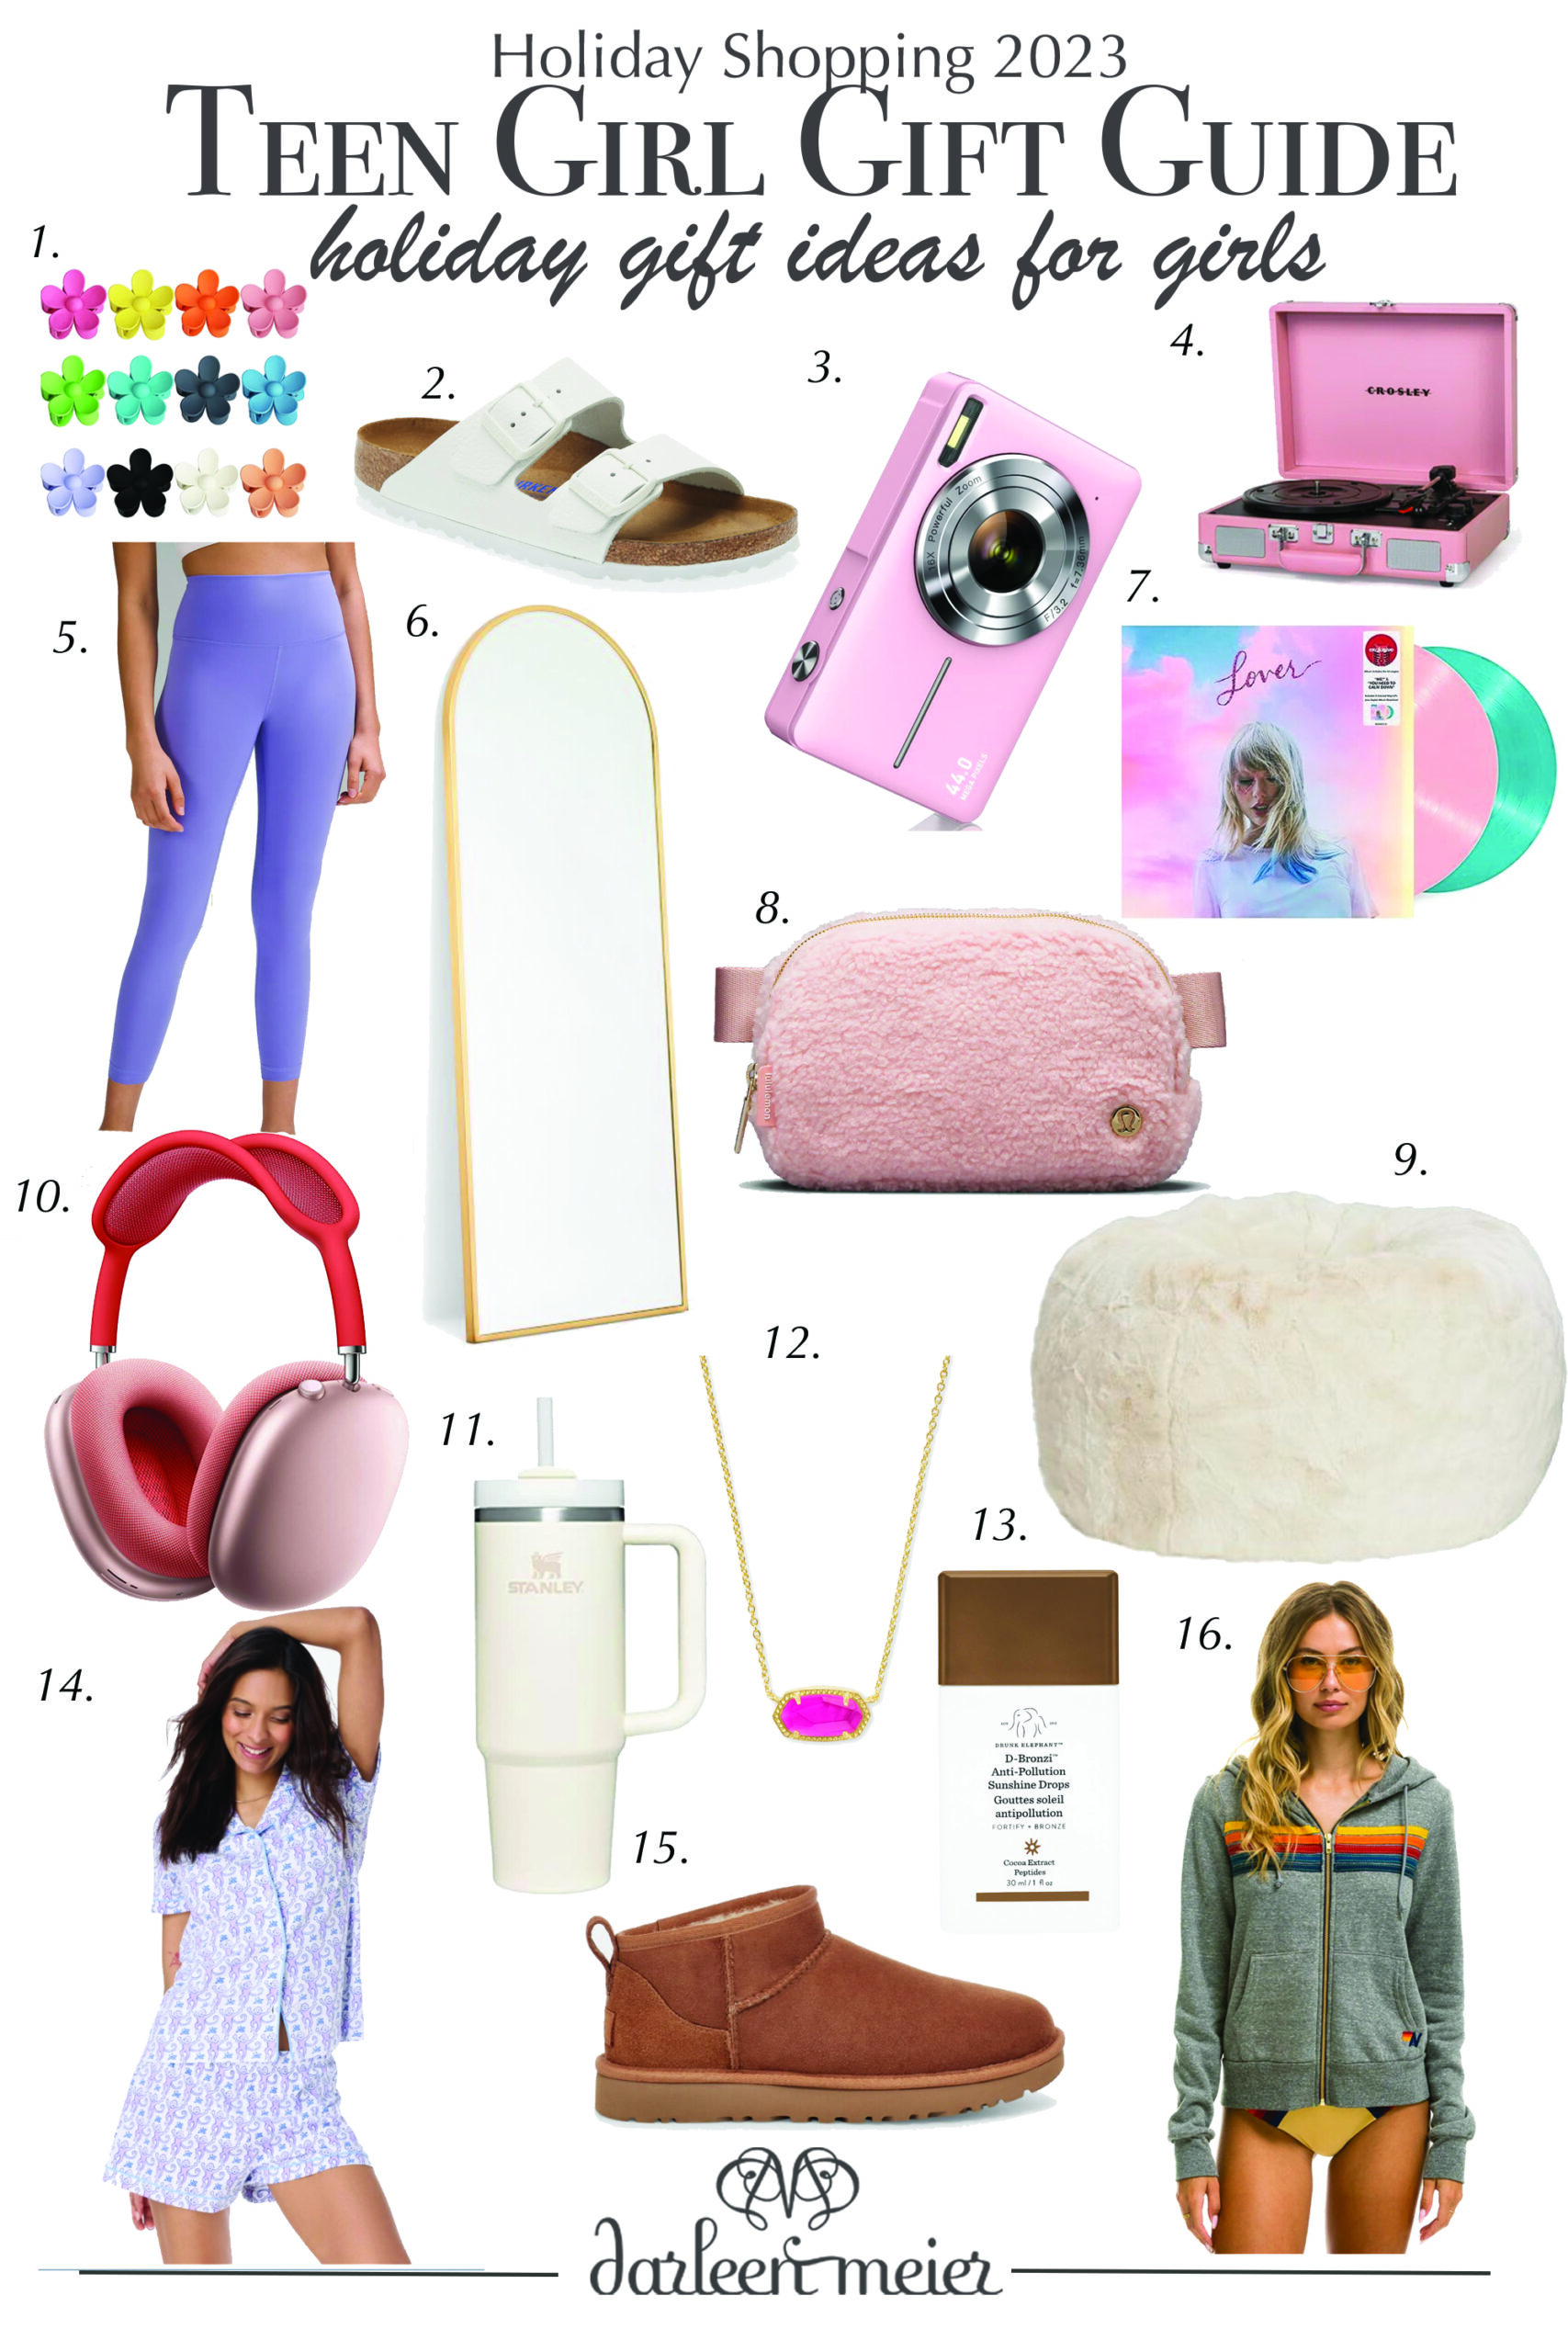 Gift Guide for Teen Girls 2023 - Darling Darleen